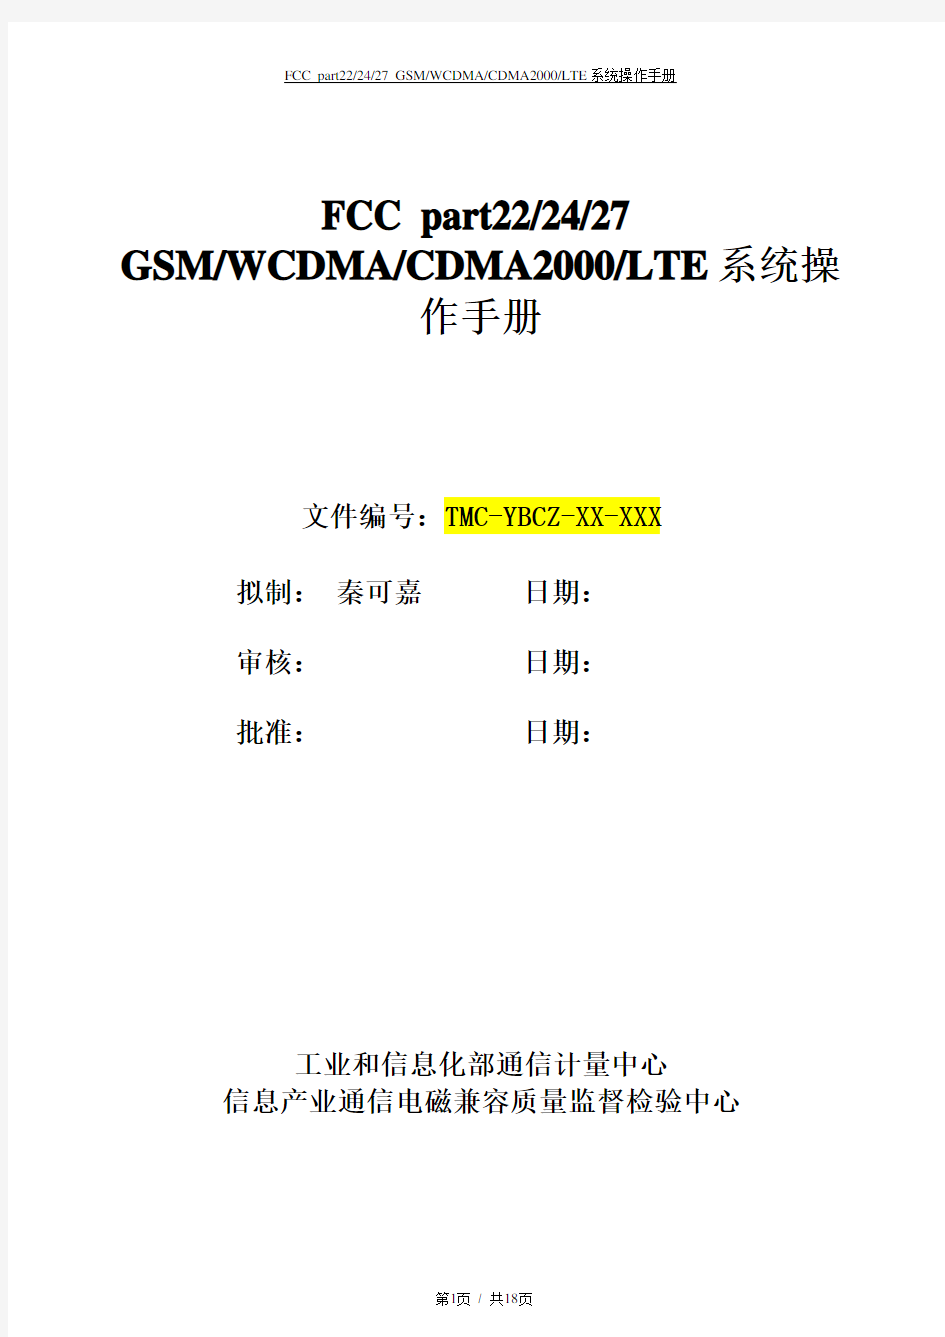 FCC part22_24_27 GSM_WCDMA_CDMA2000系统操作手册v1.0